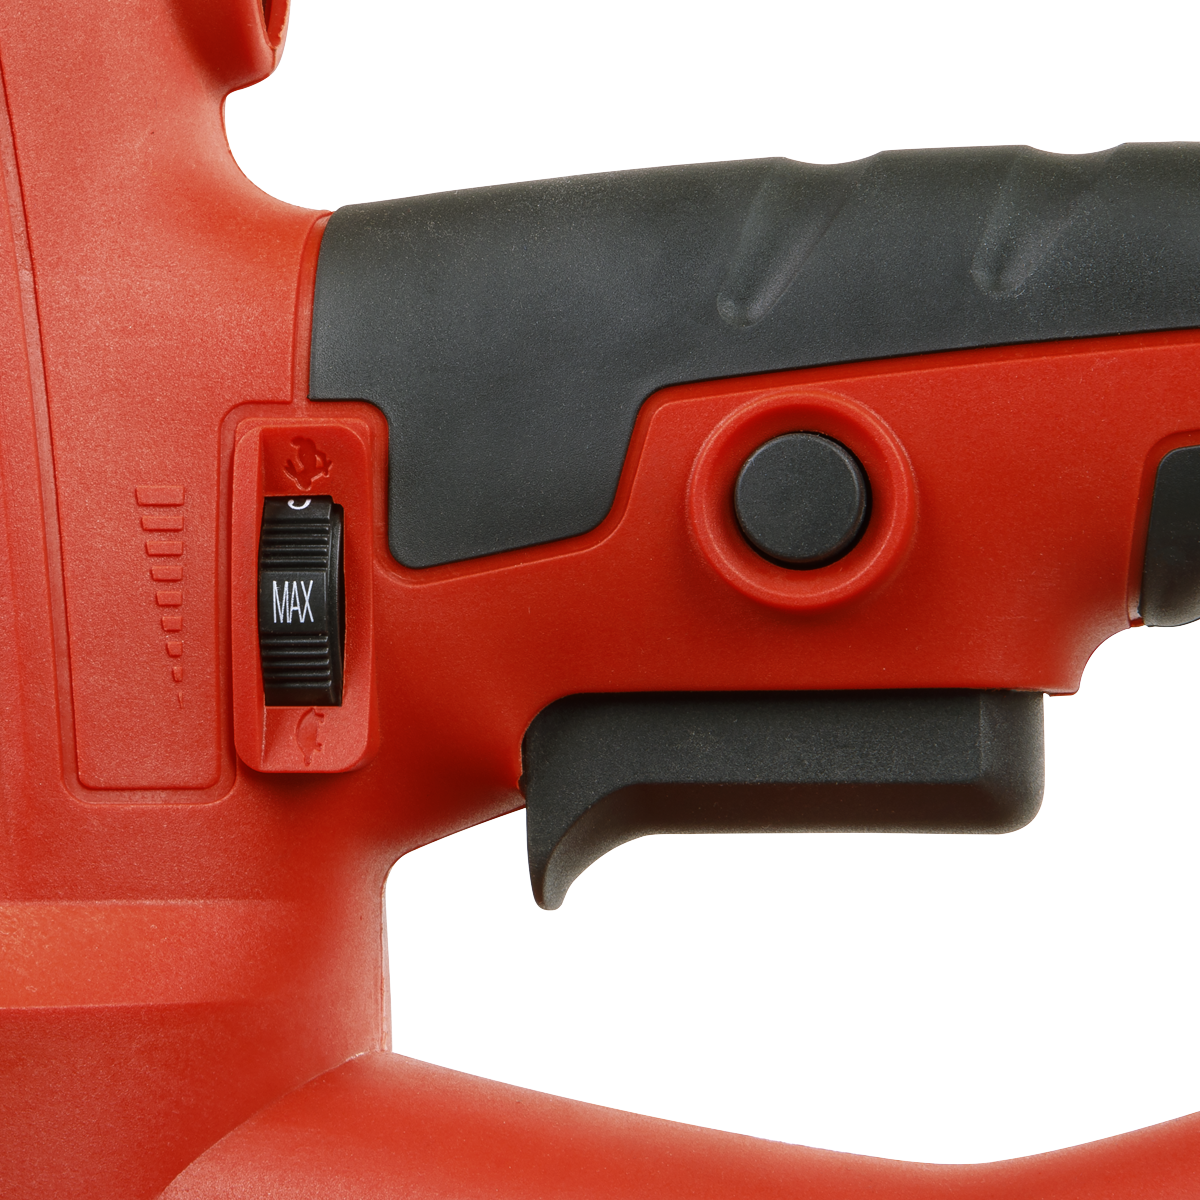 ERGONOMIC DESIGN - Soft grip handle for added comfort during use.